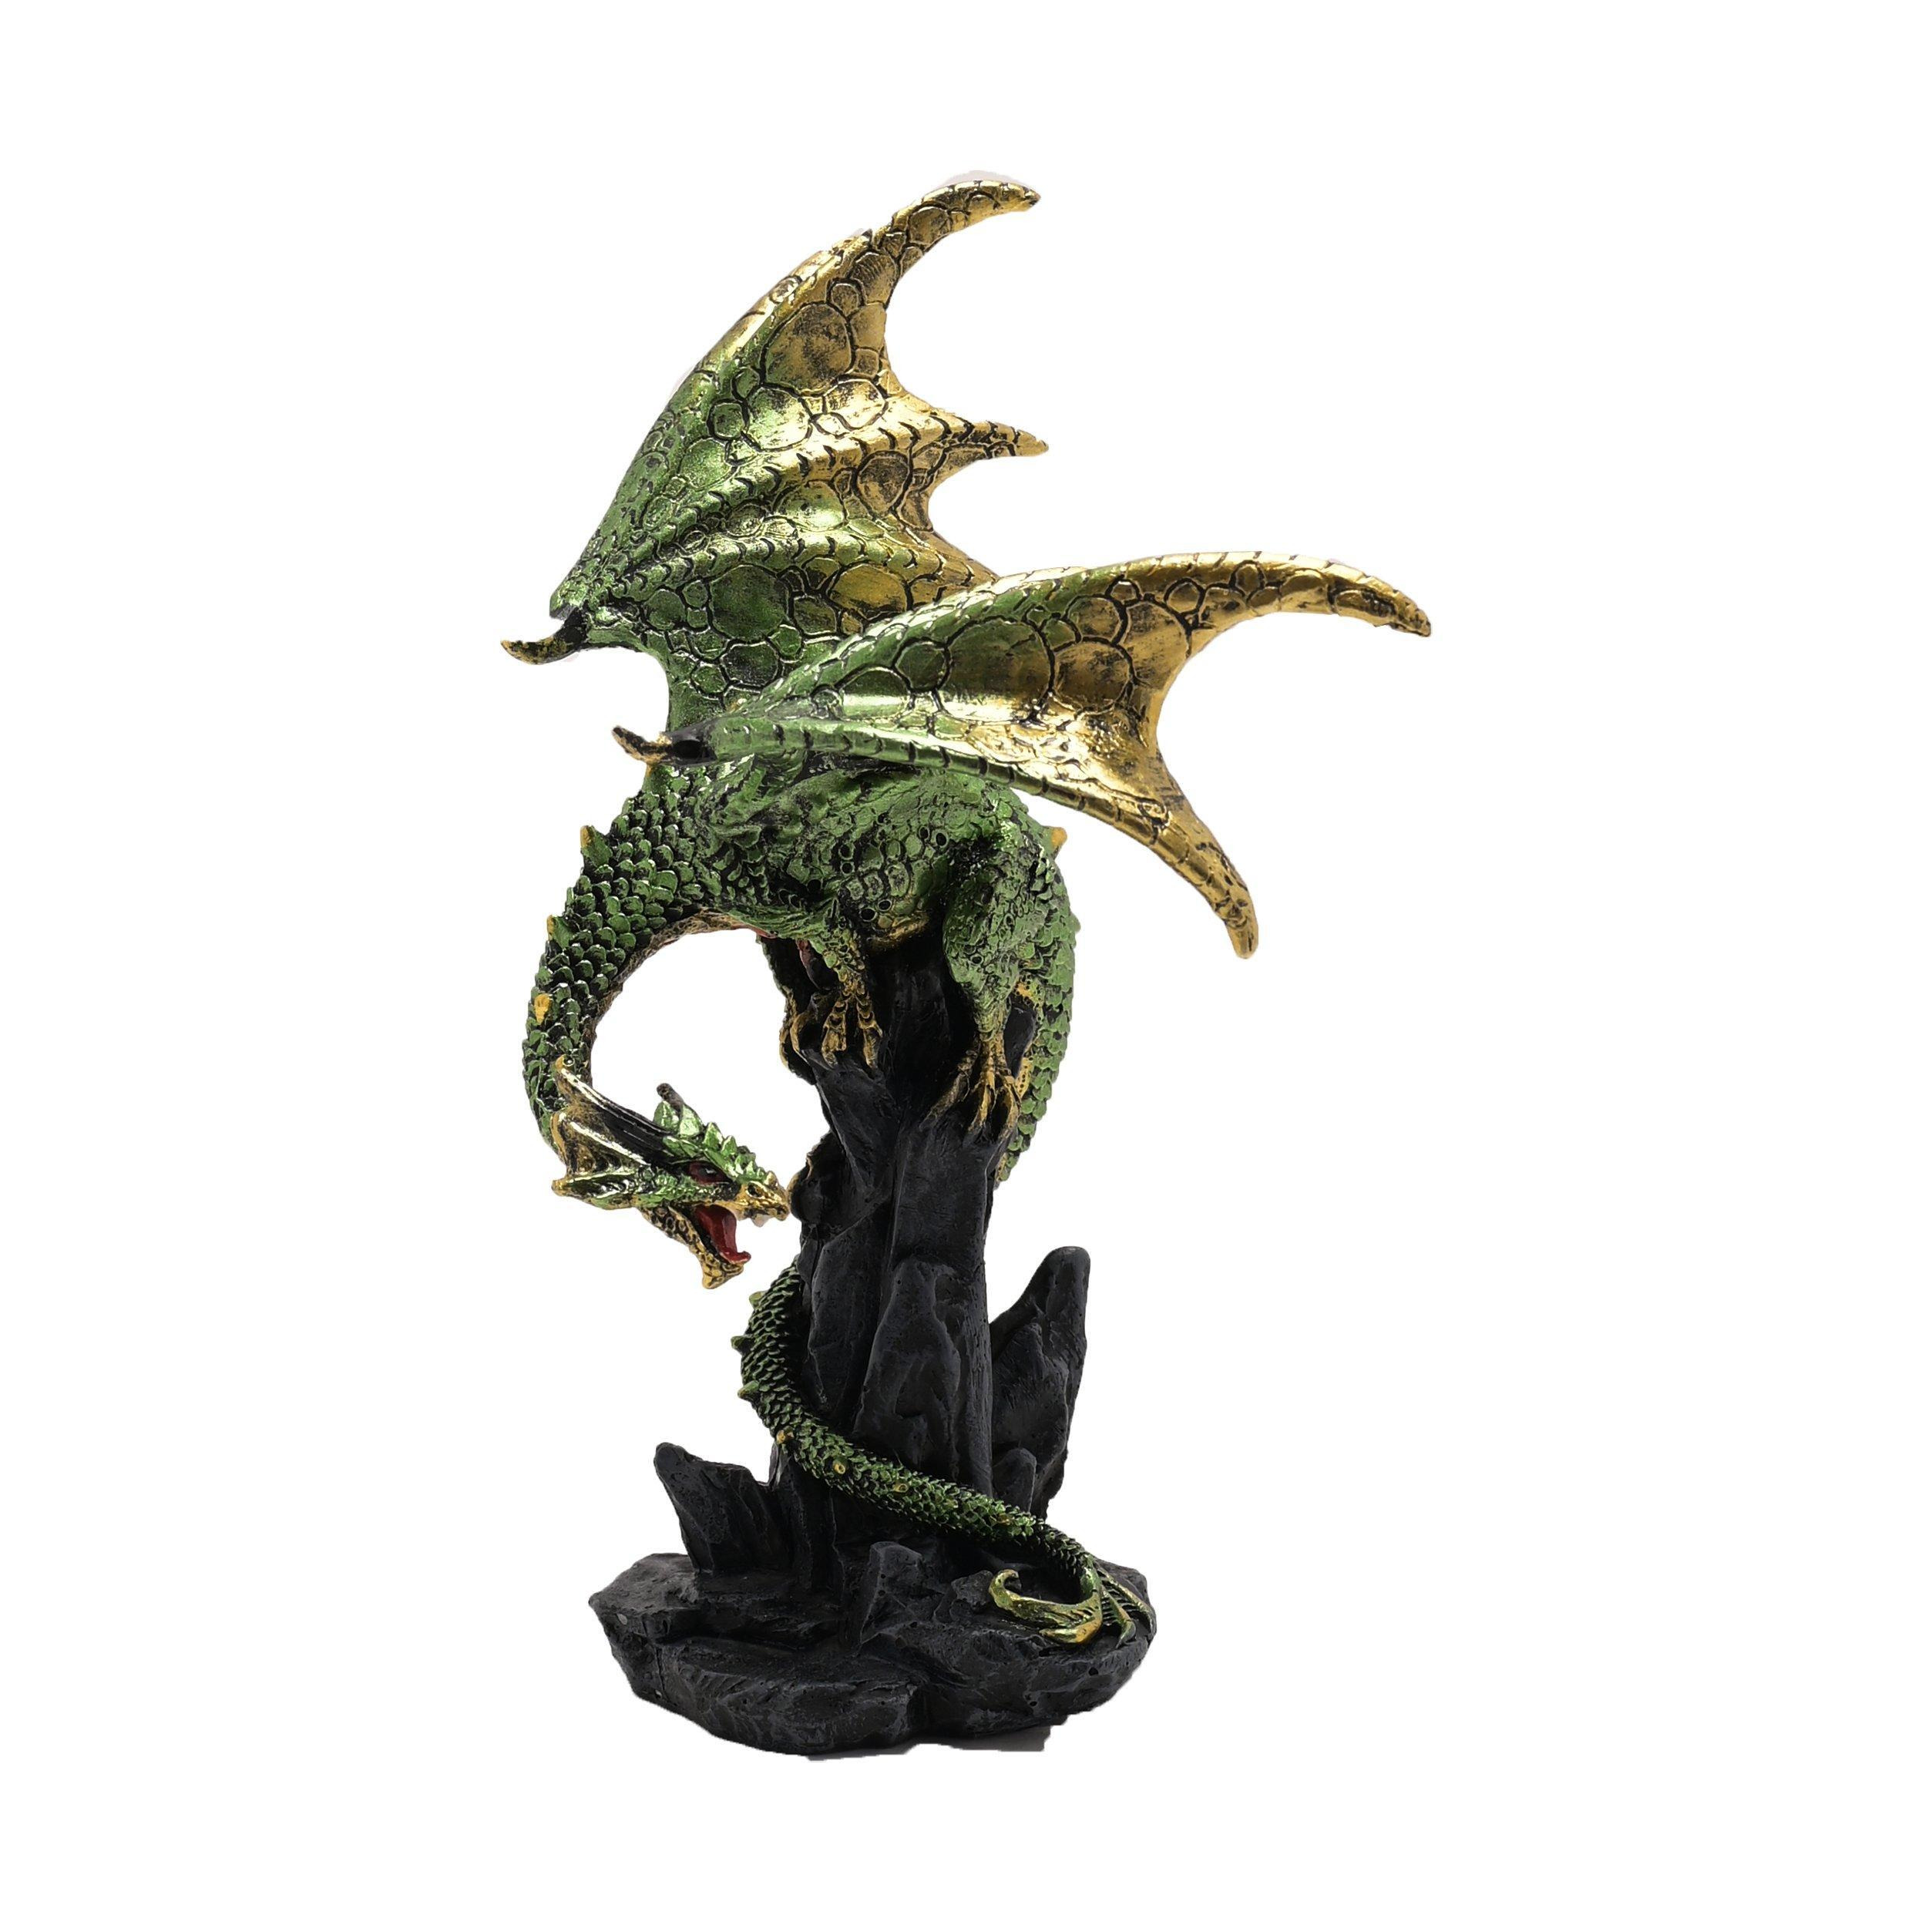 Hocus Pocus Halloween Green Dragon on Rocks Figurine - image 1